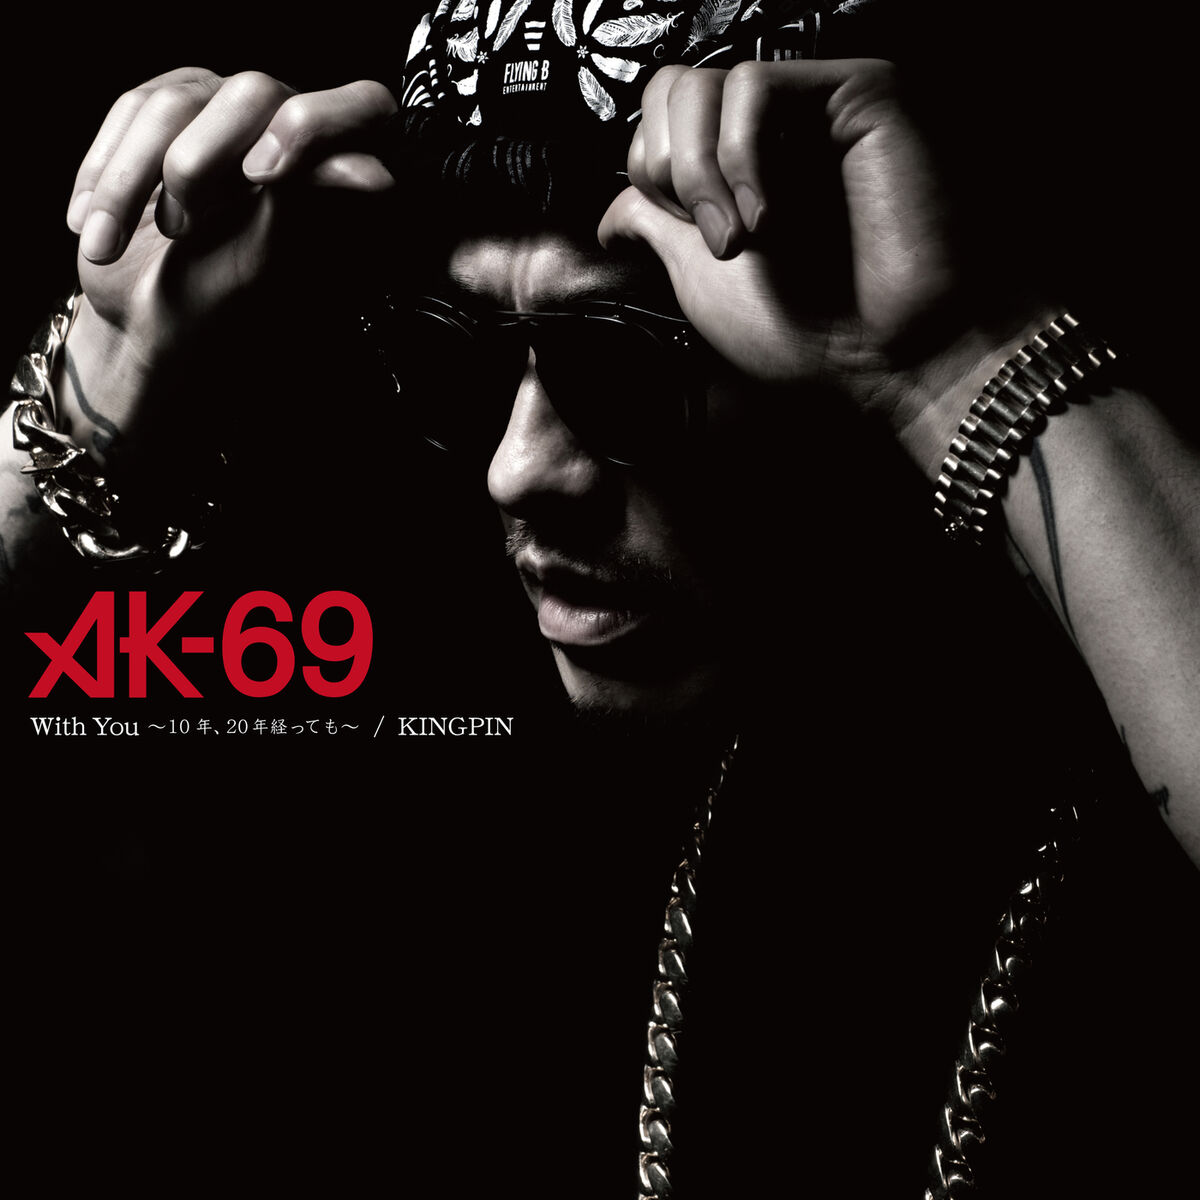 AK-69: albums, songs, playlists | Listen on Deezer